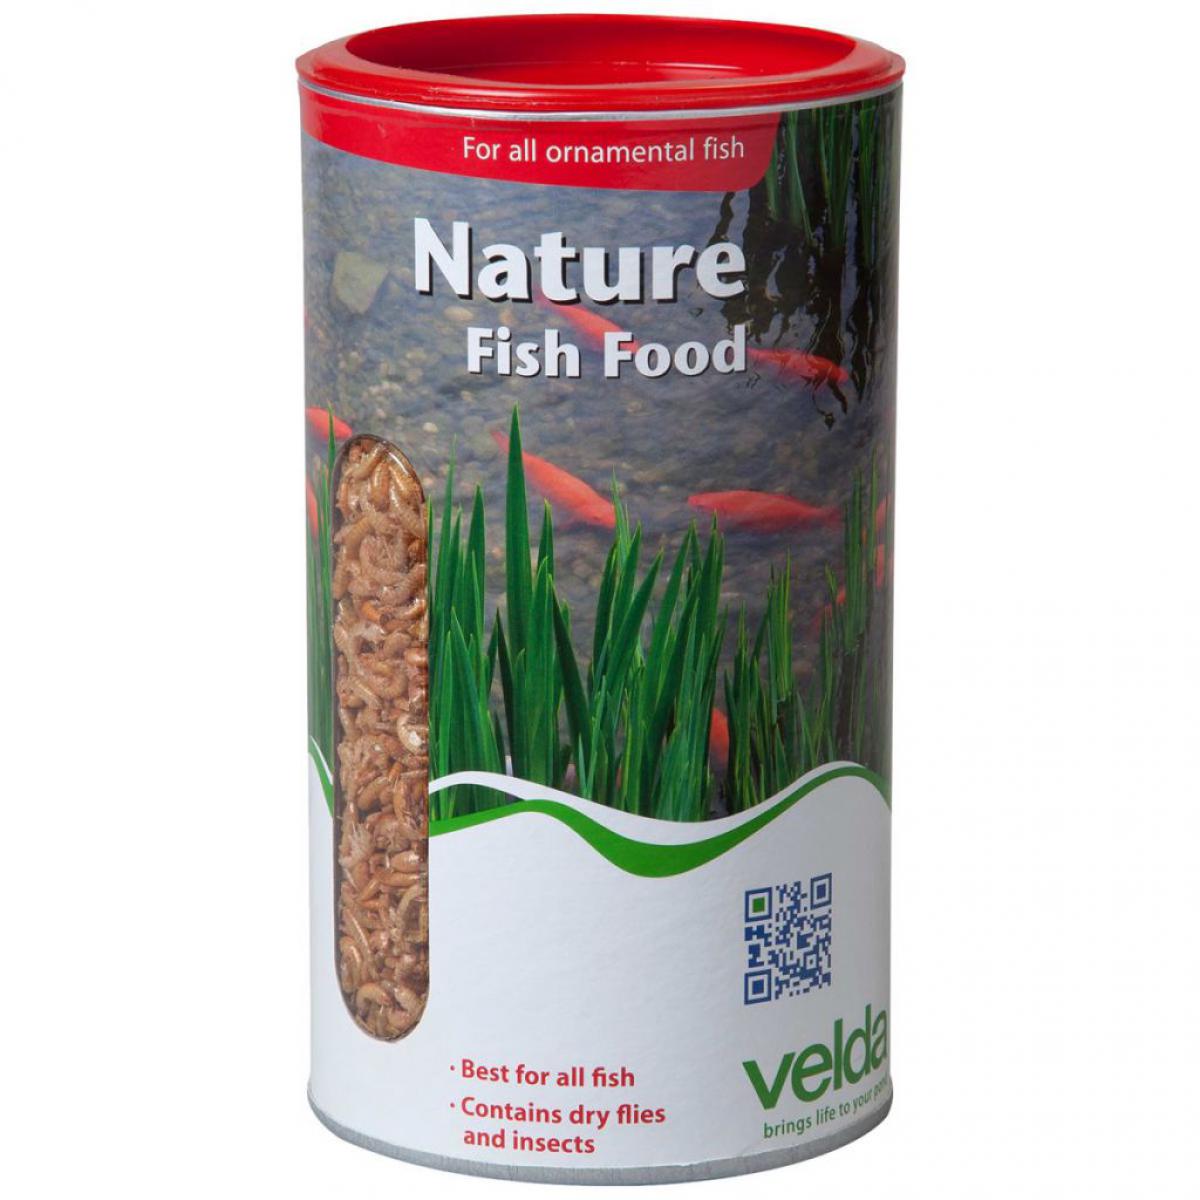 Velda - Velda Nourriture naturelle pour poisson 260 g - Alimentation pour poisson